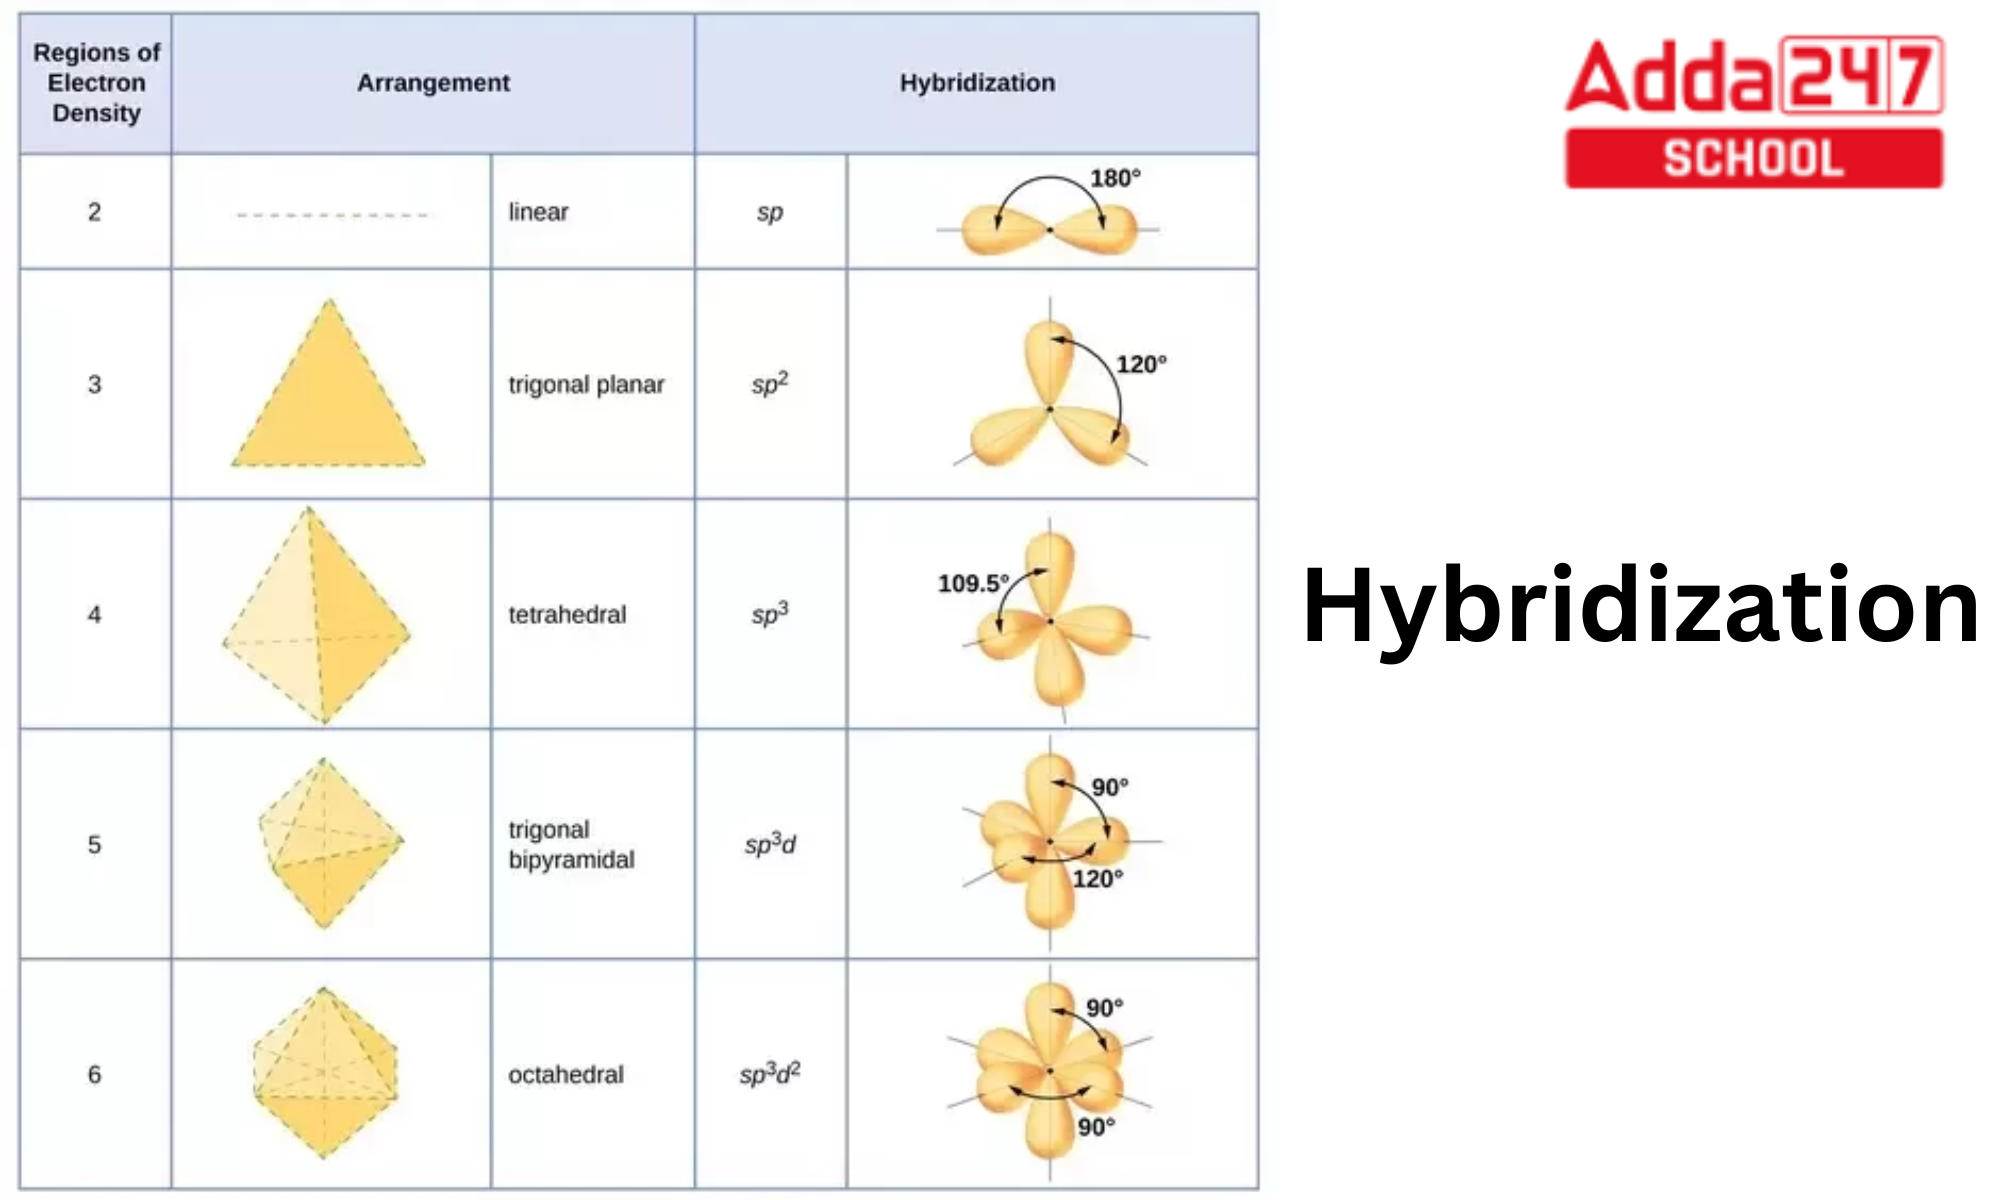 bh3 hybridization